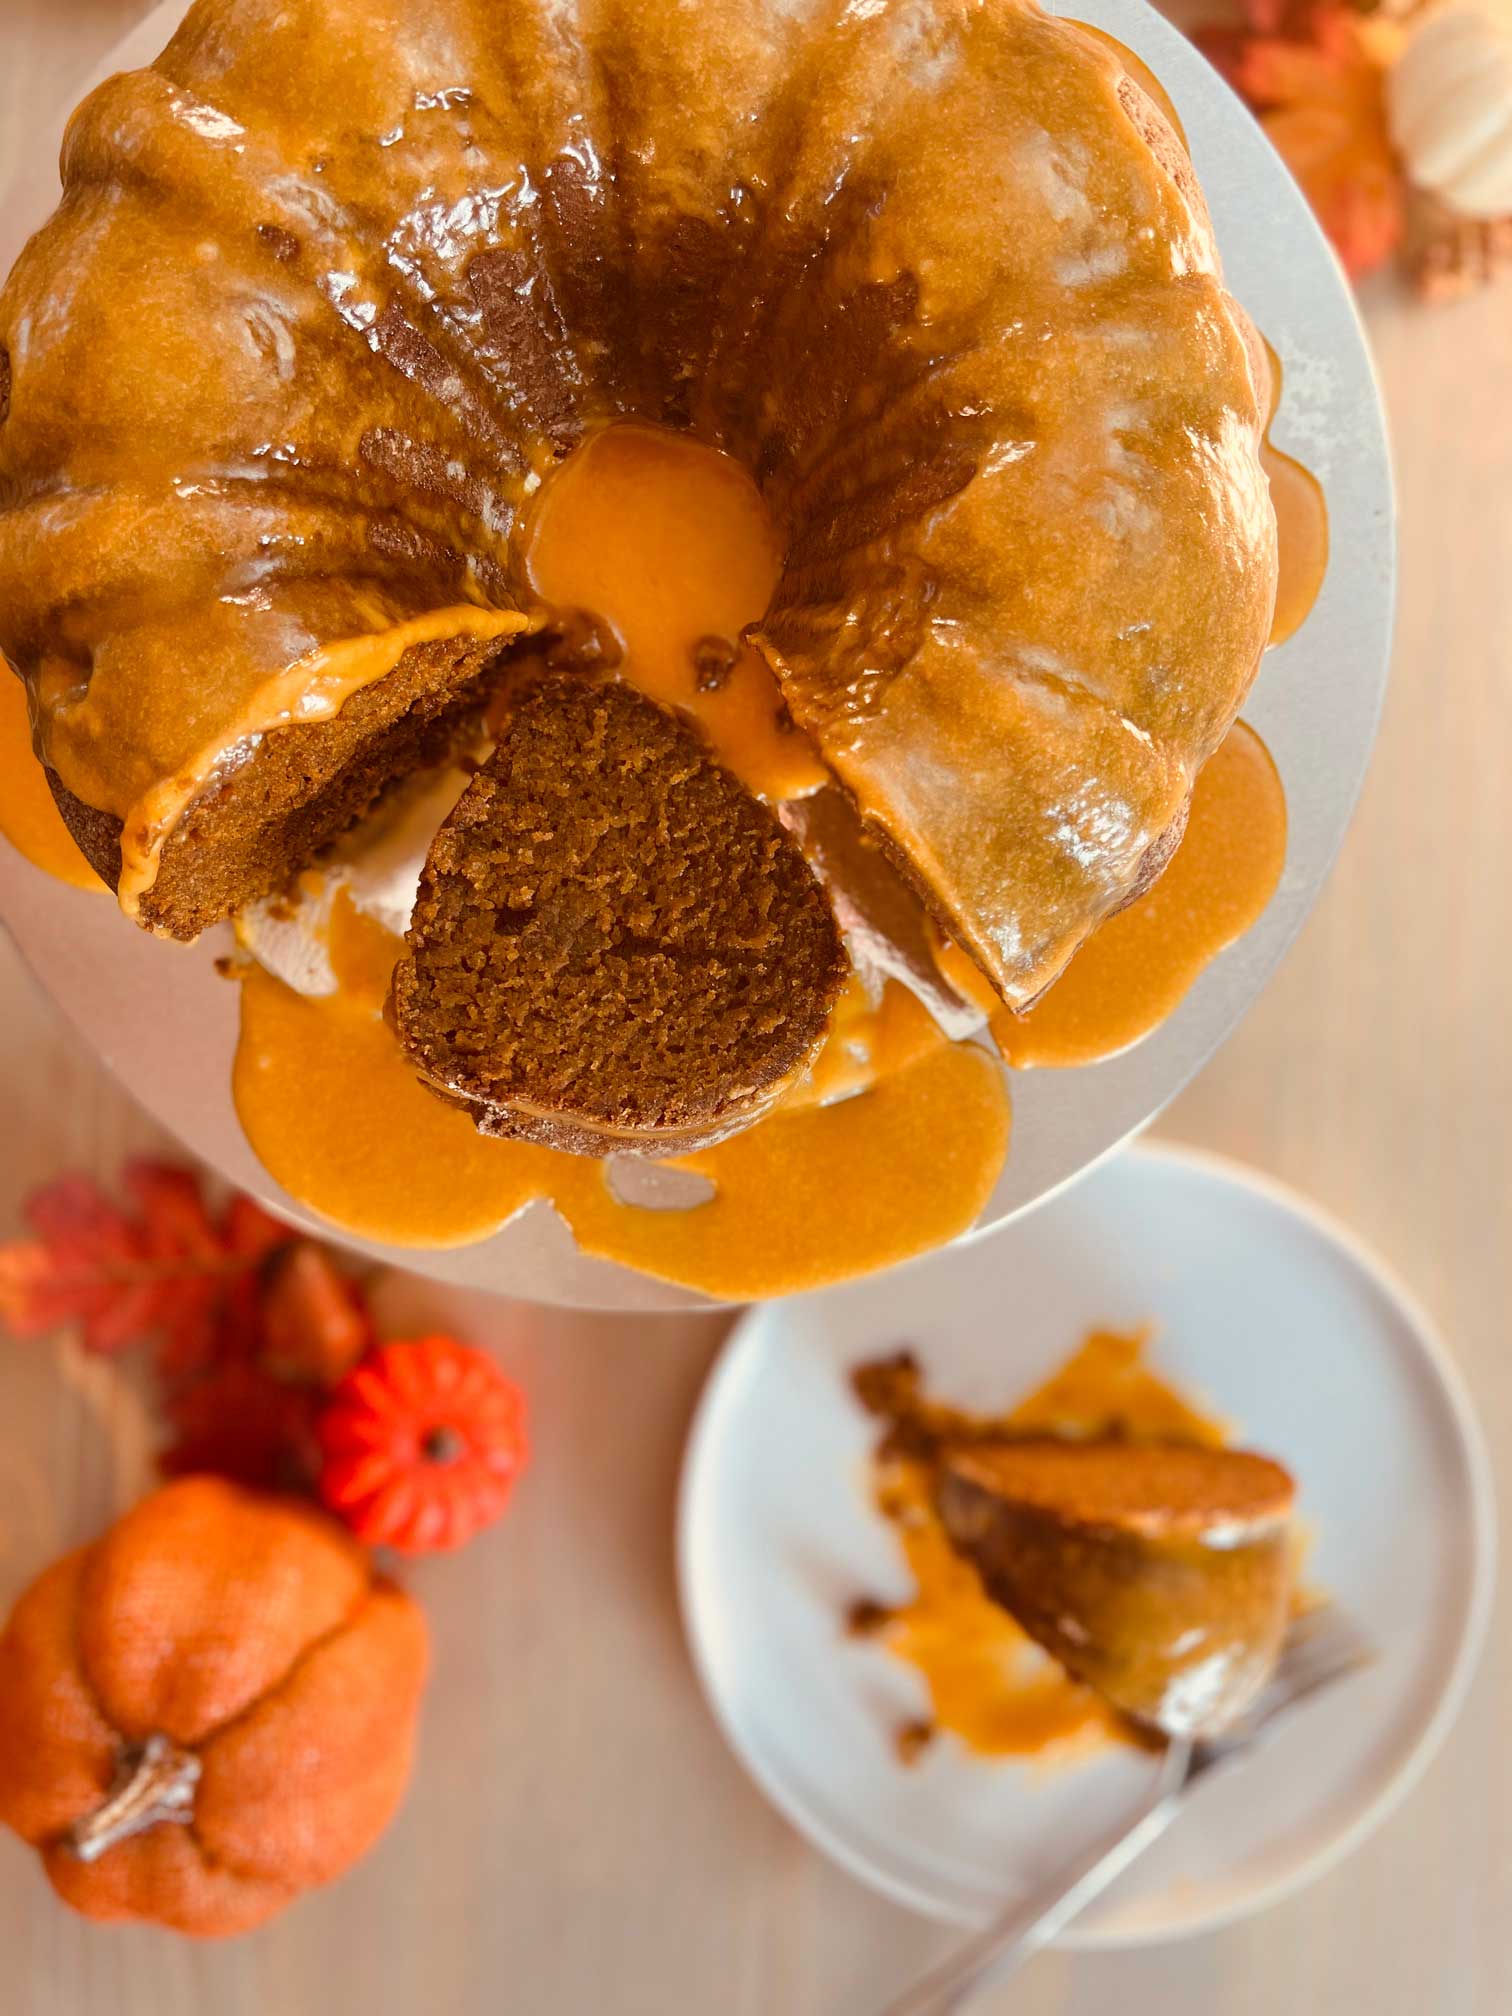 Dairy-free Pumpkin Stout Gingerbread cake arranged on a pedestal with pumpkin icing.